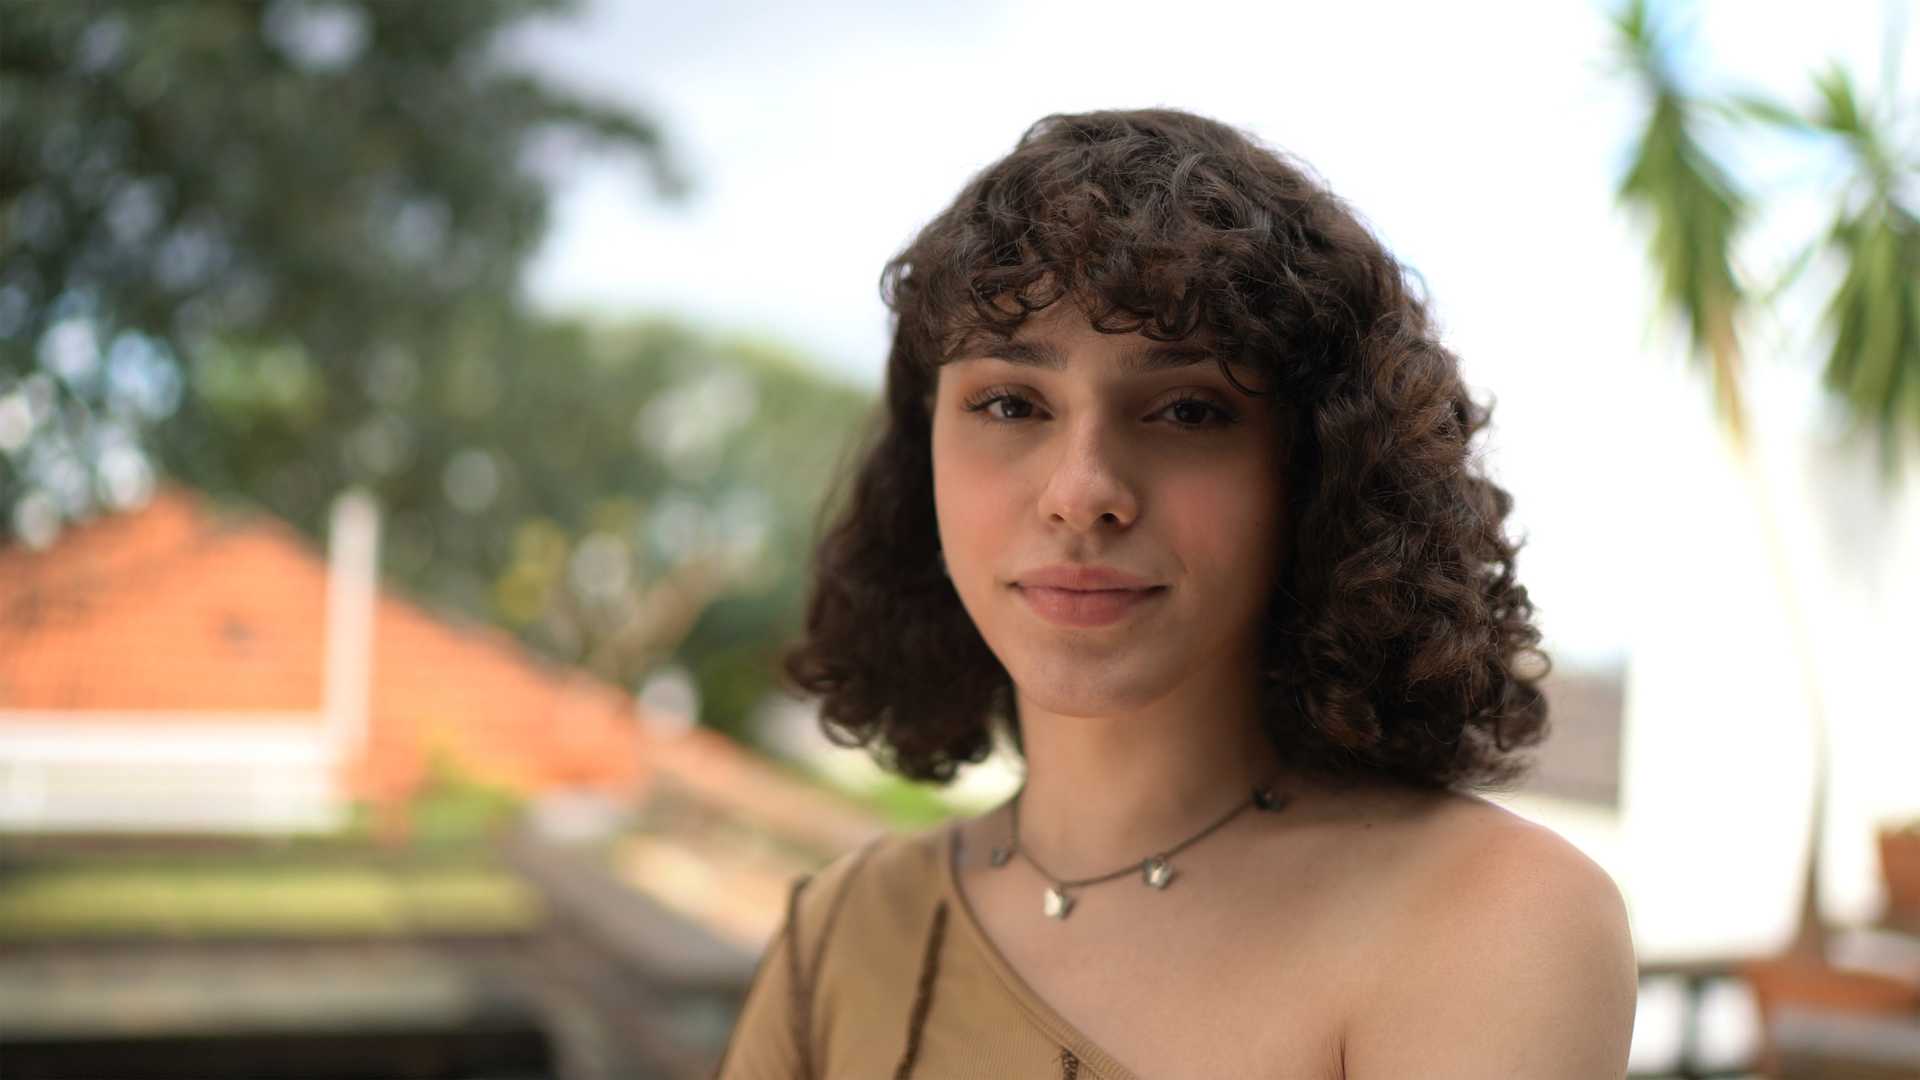 Portrait of a transgender woman